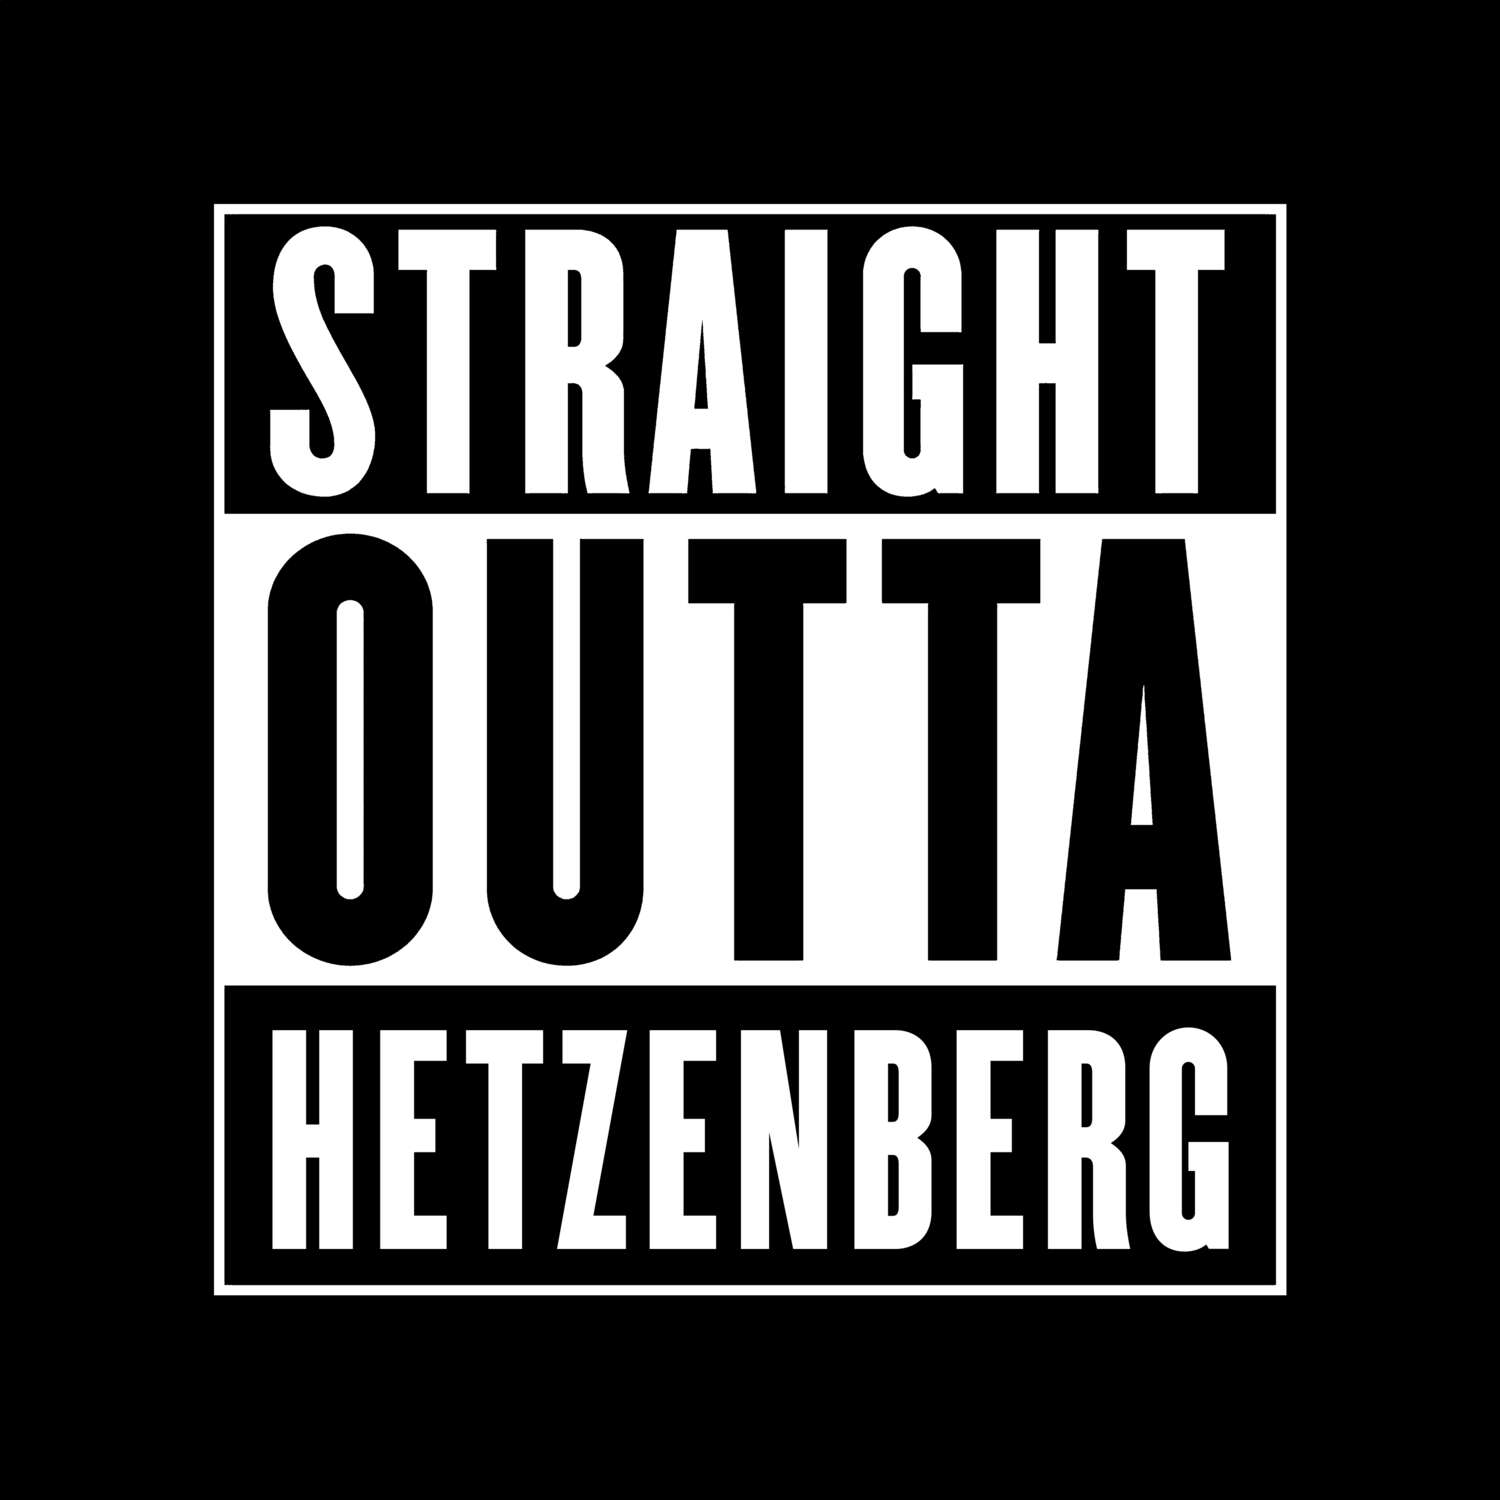 Hetzenberg T-Shirt »Straight Outta«